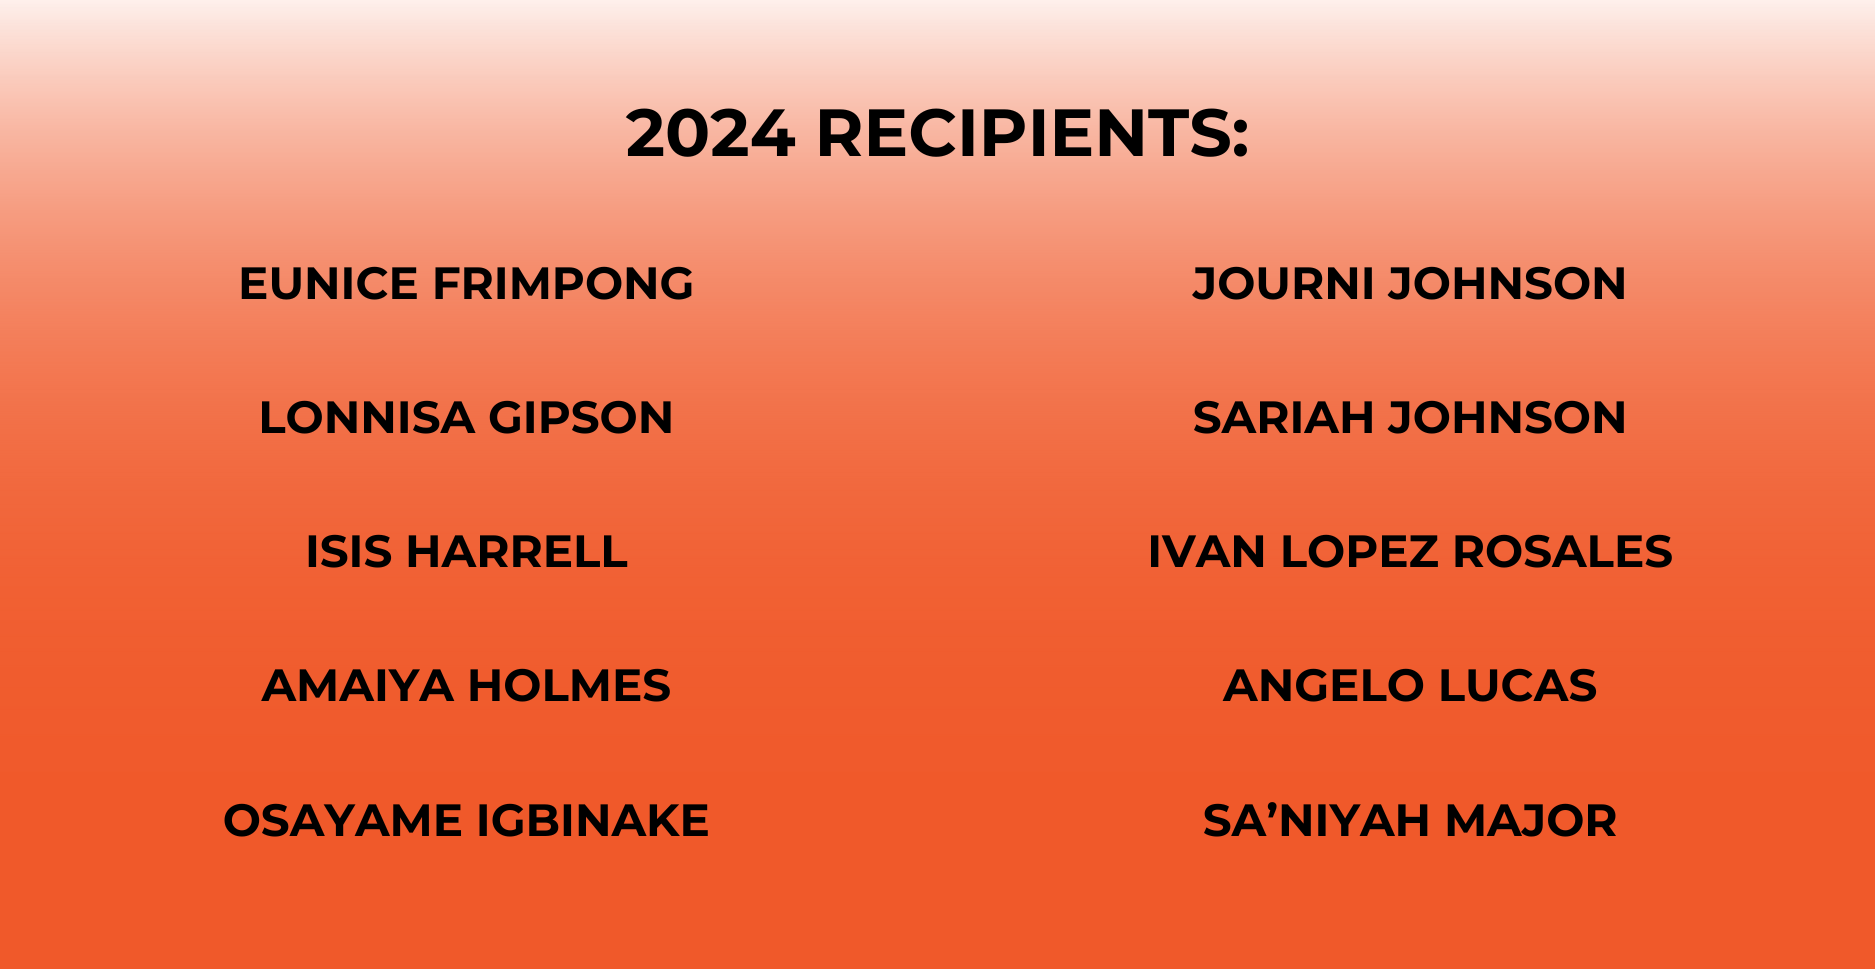 2024 recipients